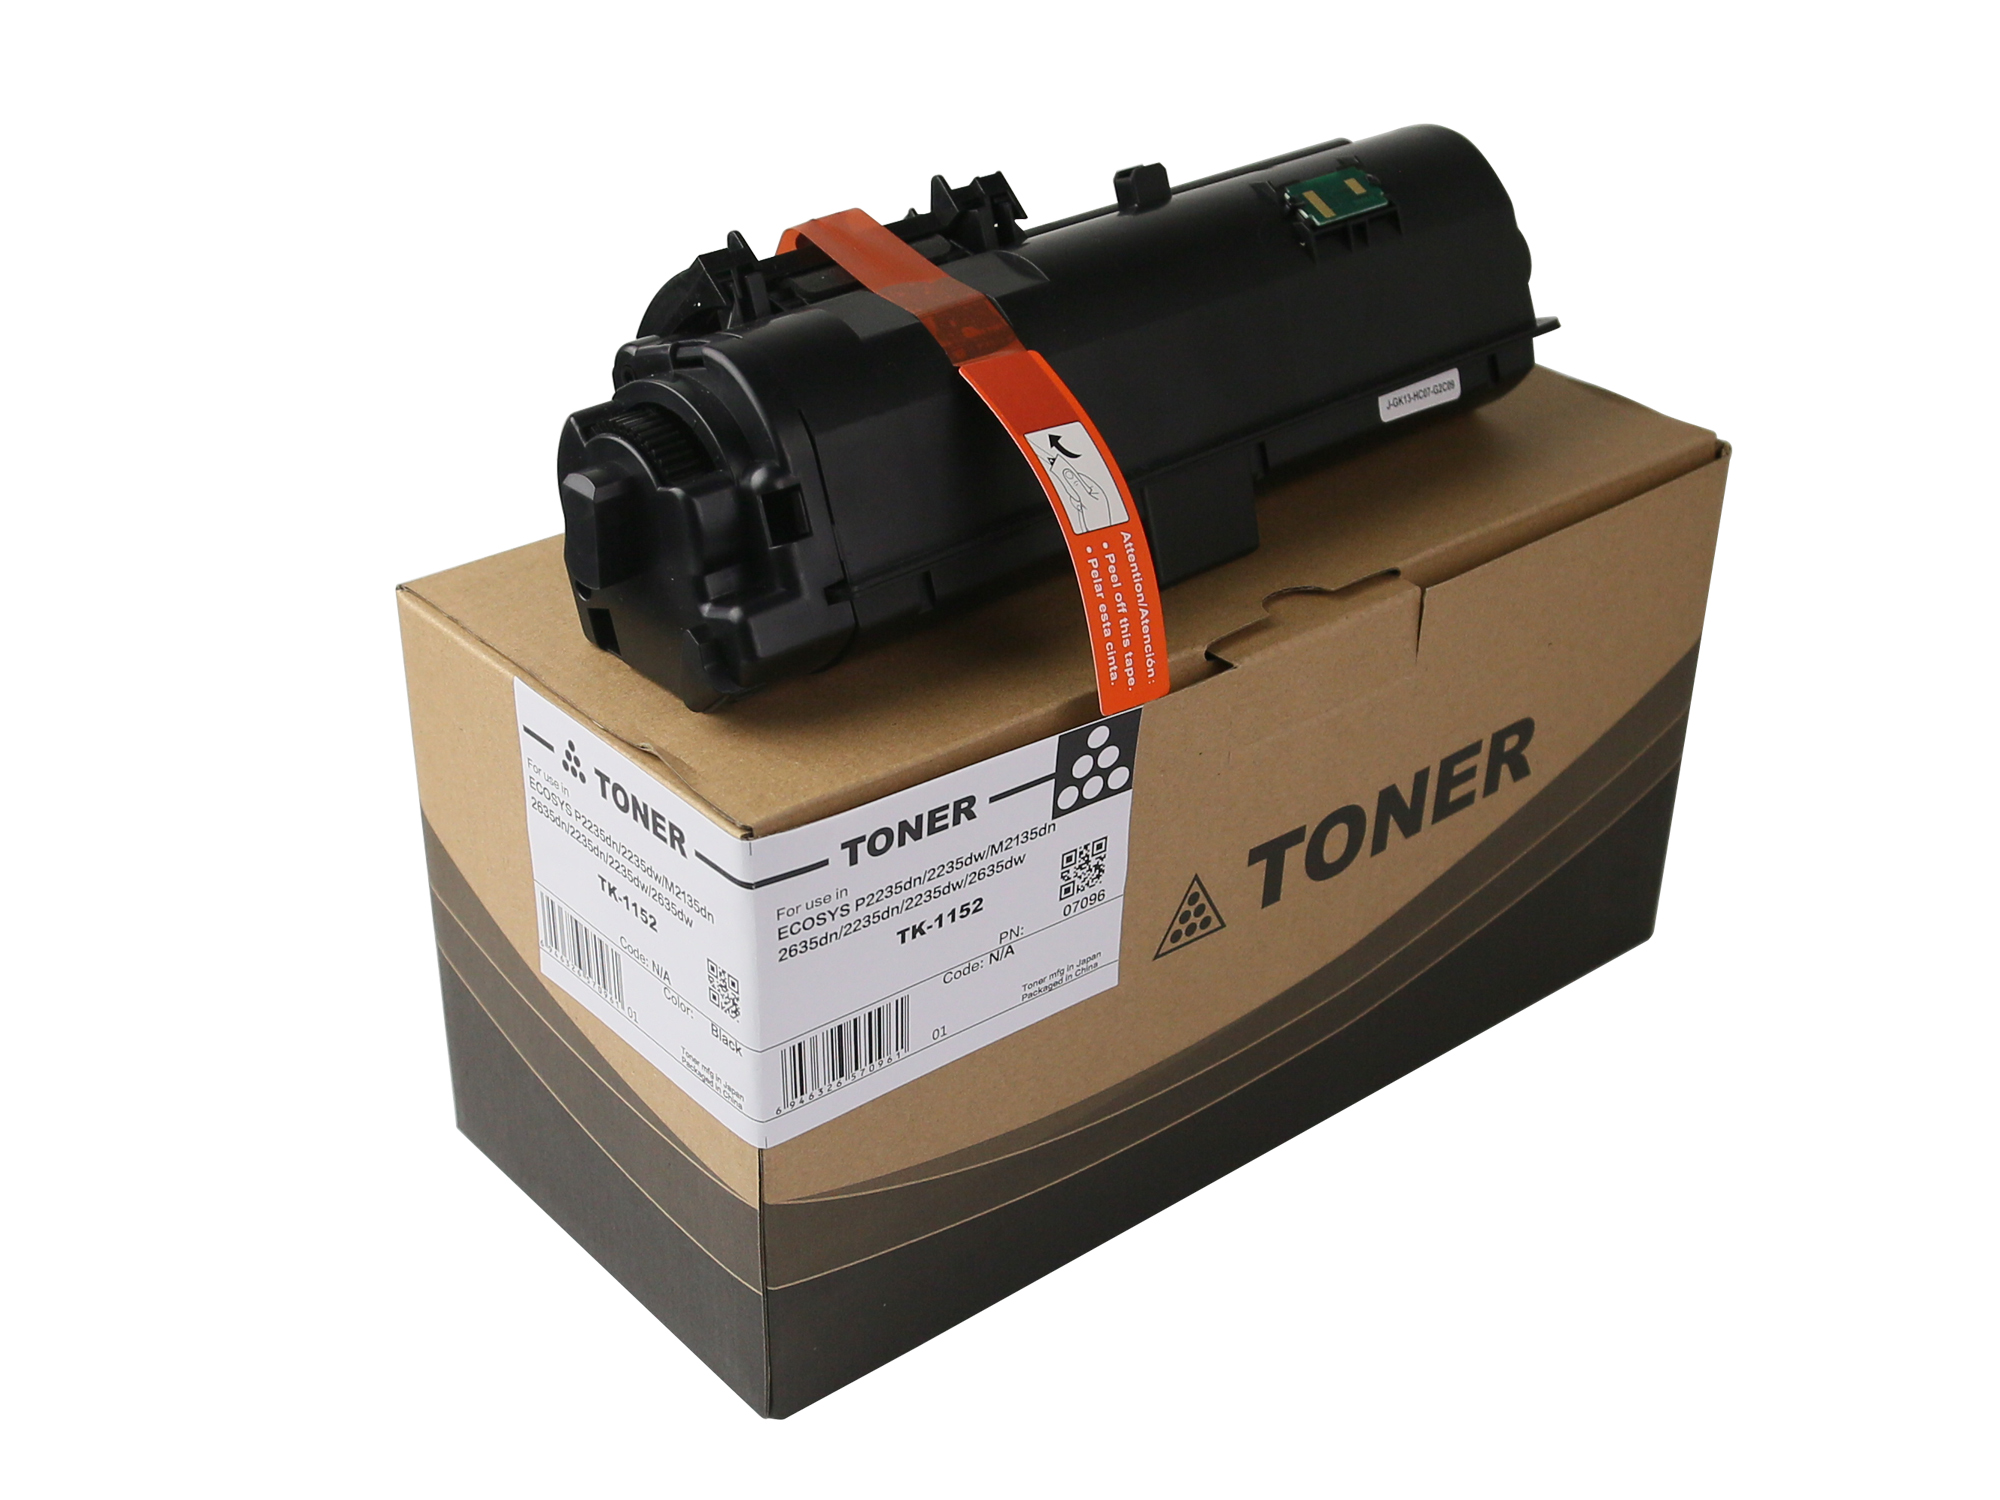 TK-1152 Toner Cartridge for Kyocera ECOSYS P2235dn